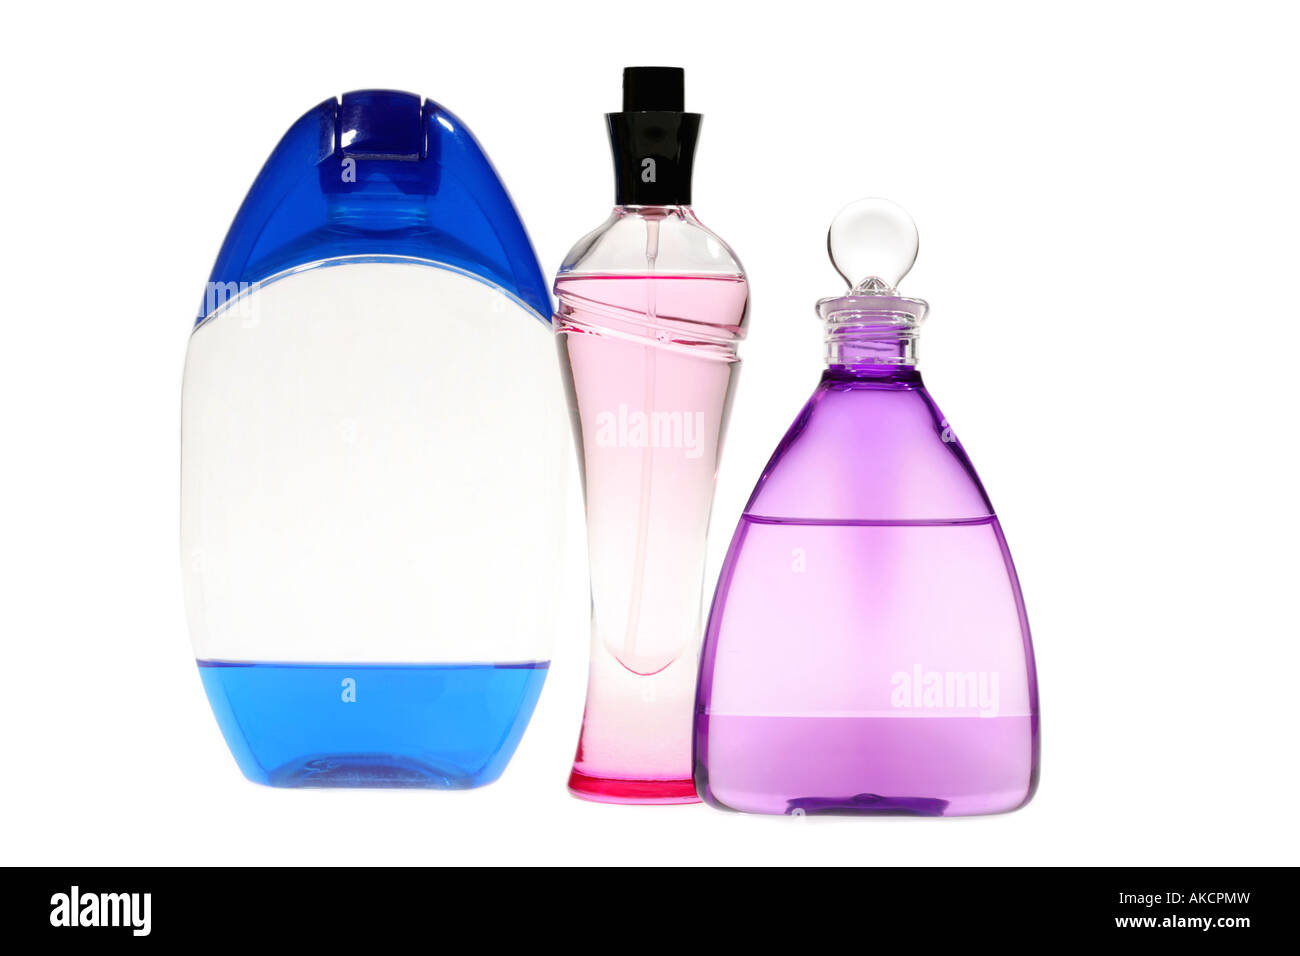 Three Vials Varicolored Bottles with Liquid Perfumery and Make up Stock Photo